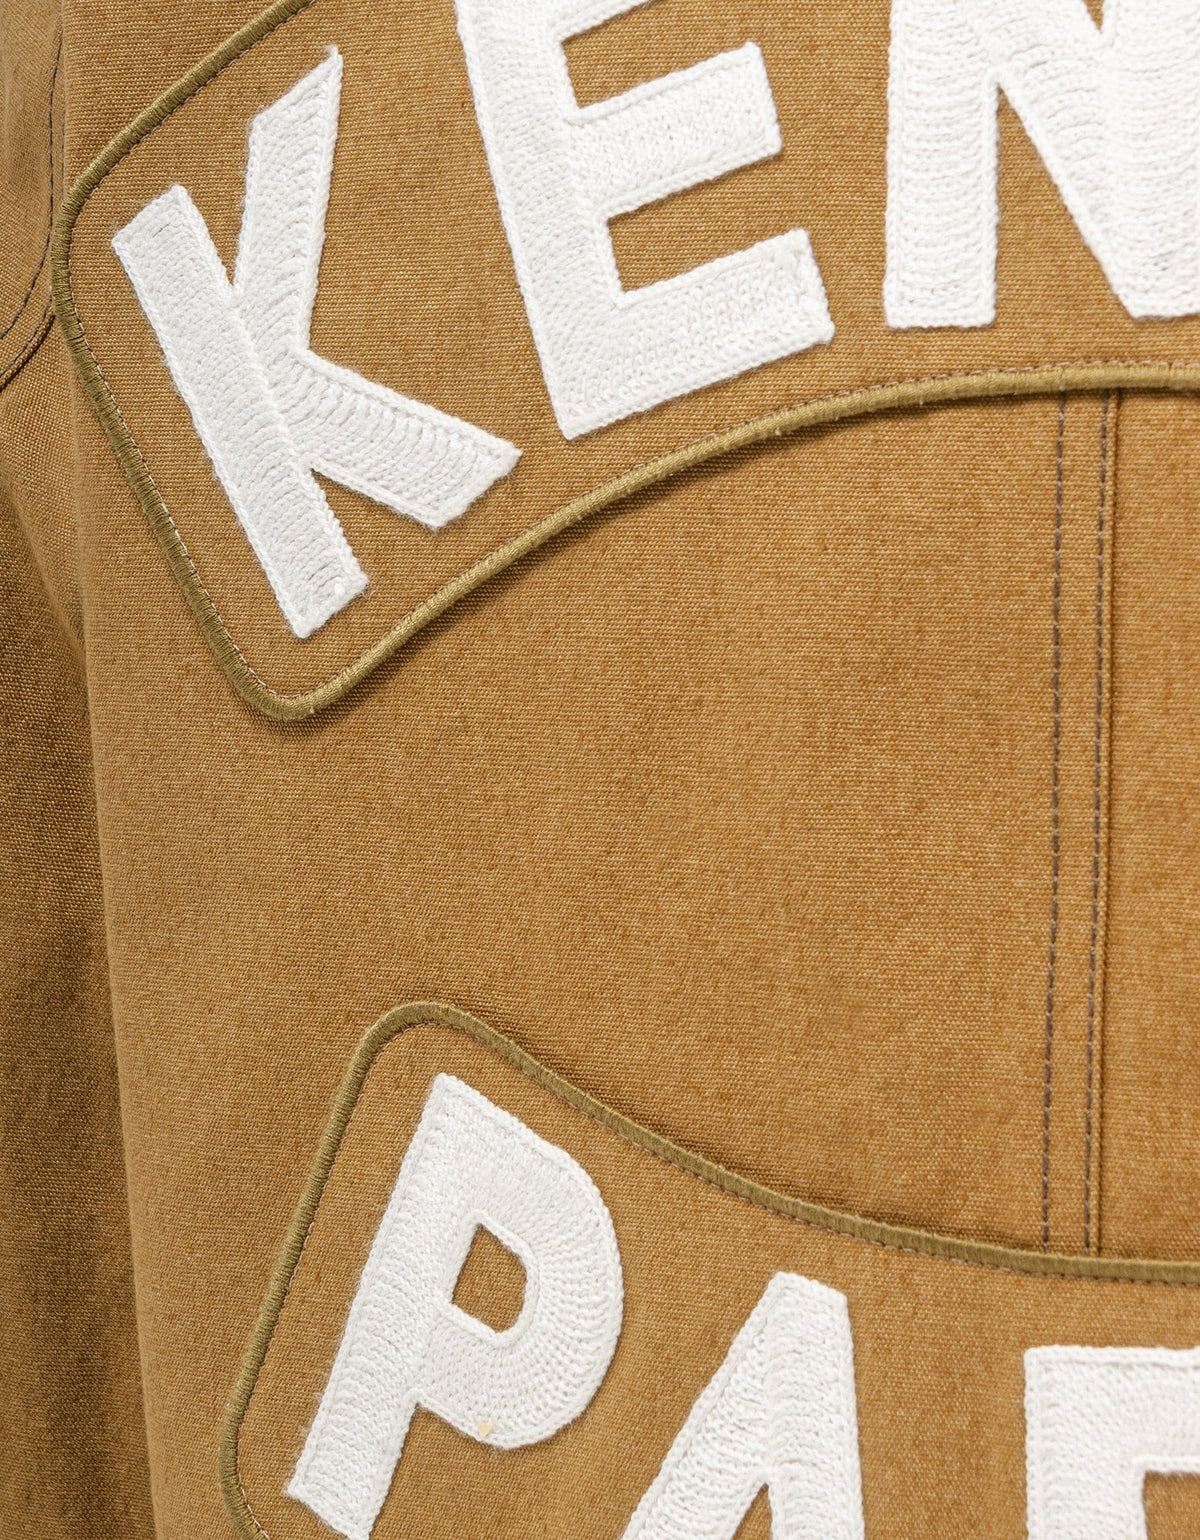 Kenzo Beige 'Kenzo Sailor' Workwear Jacket